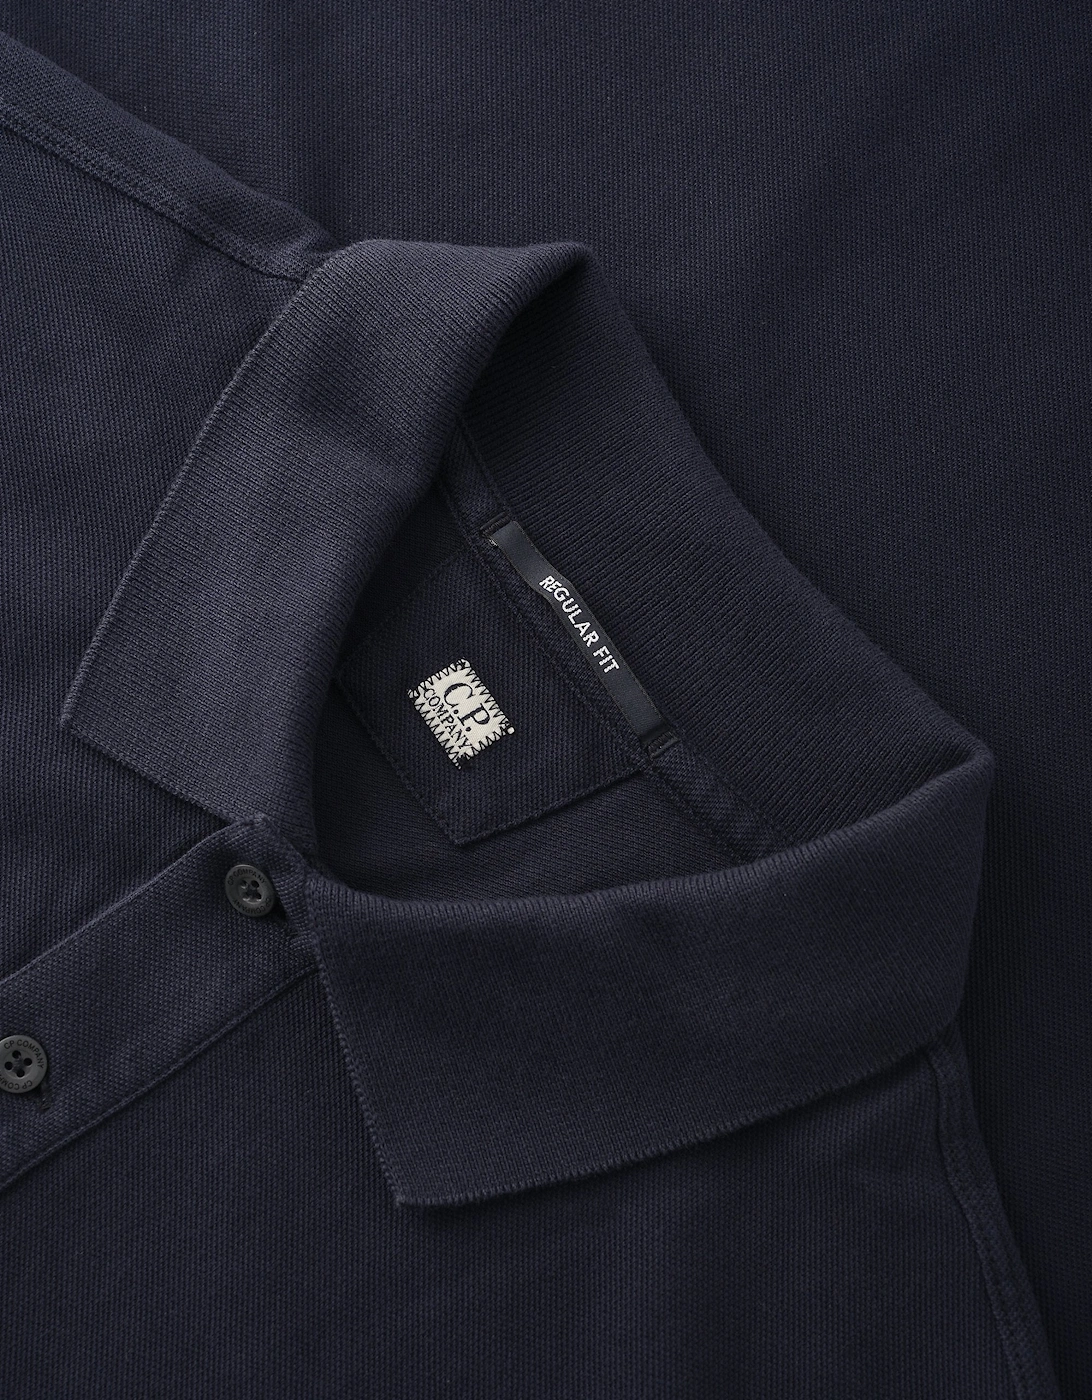 24/1 Piquet Garment Dyed Polo Navy